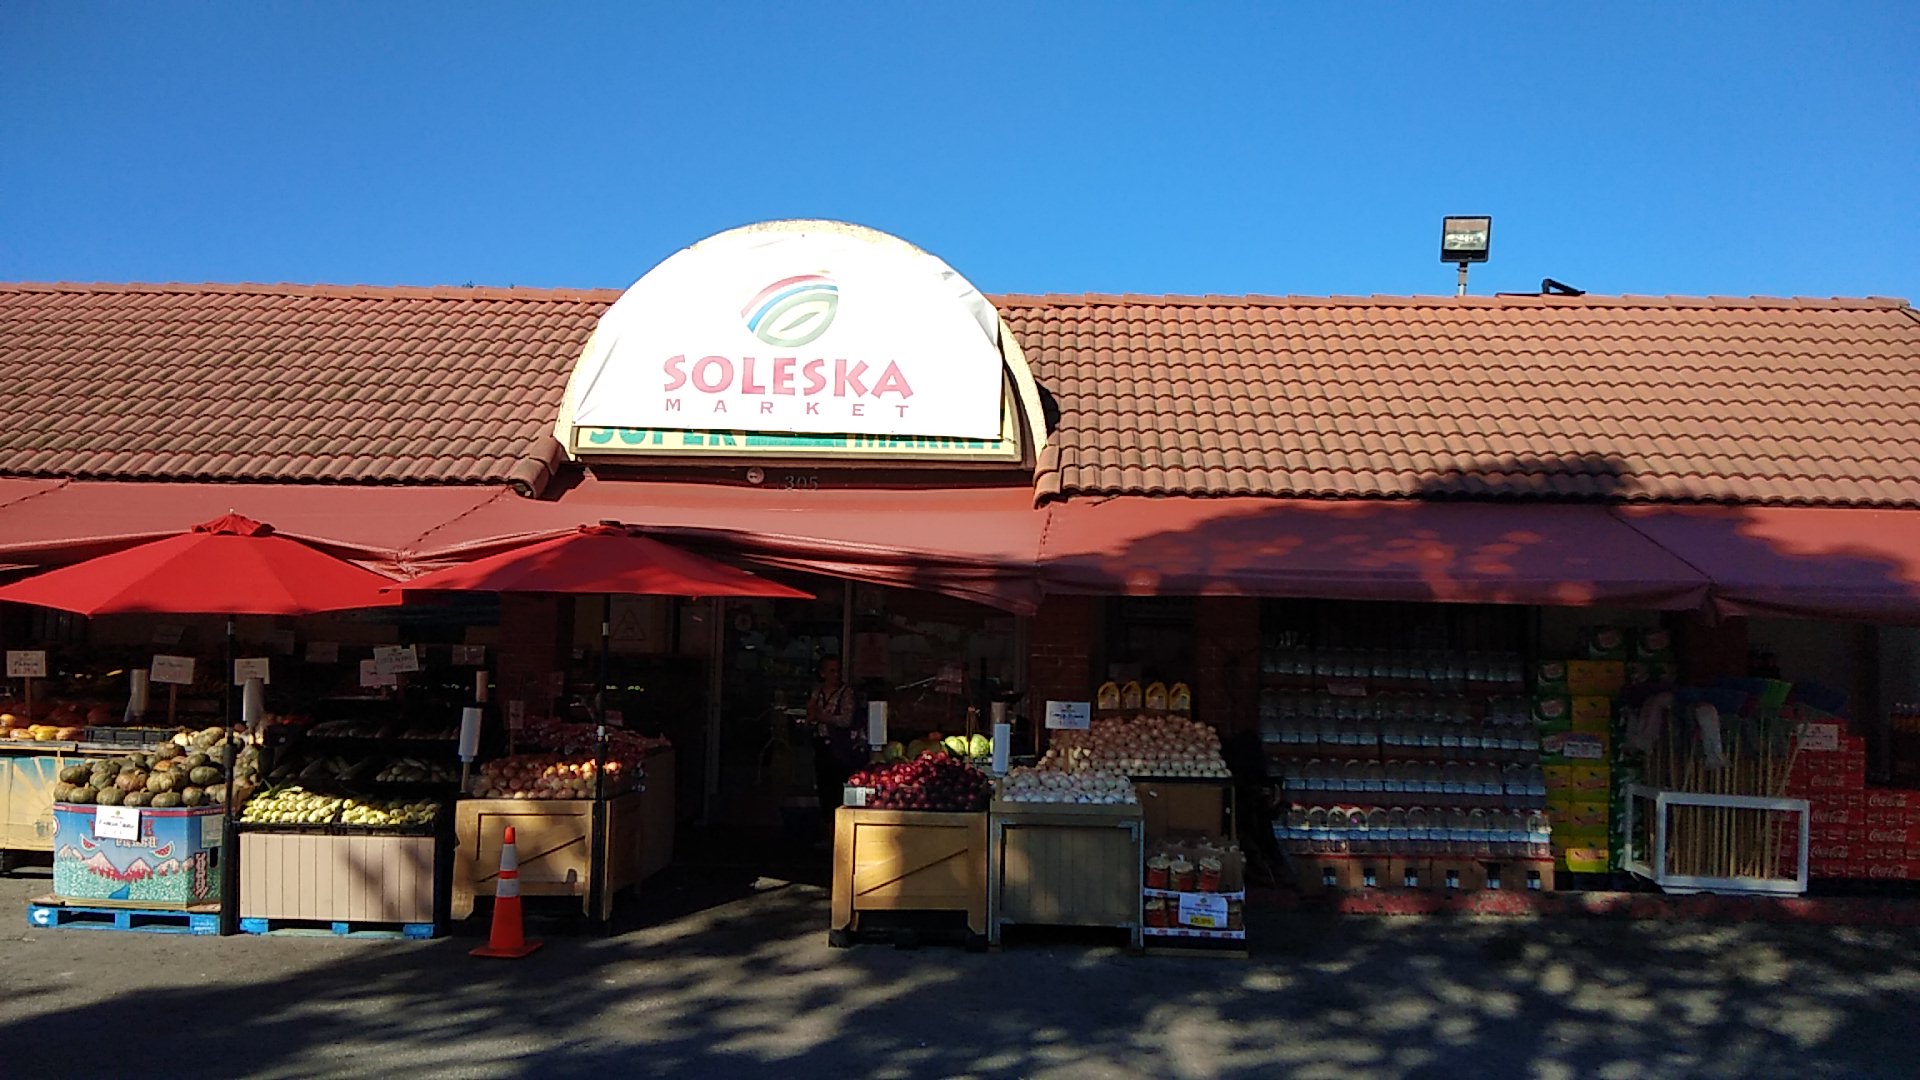 Soleska Market